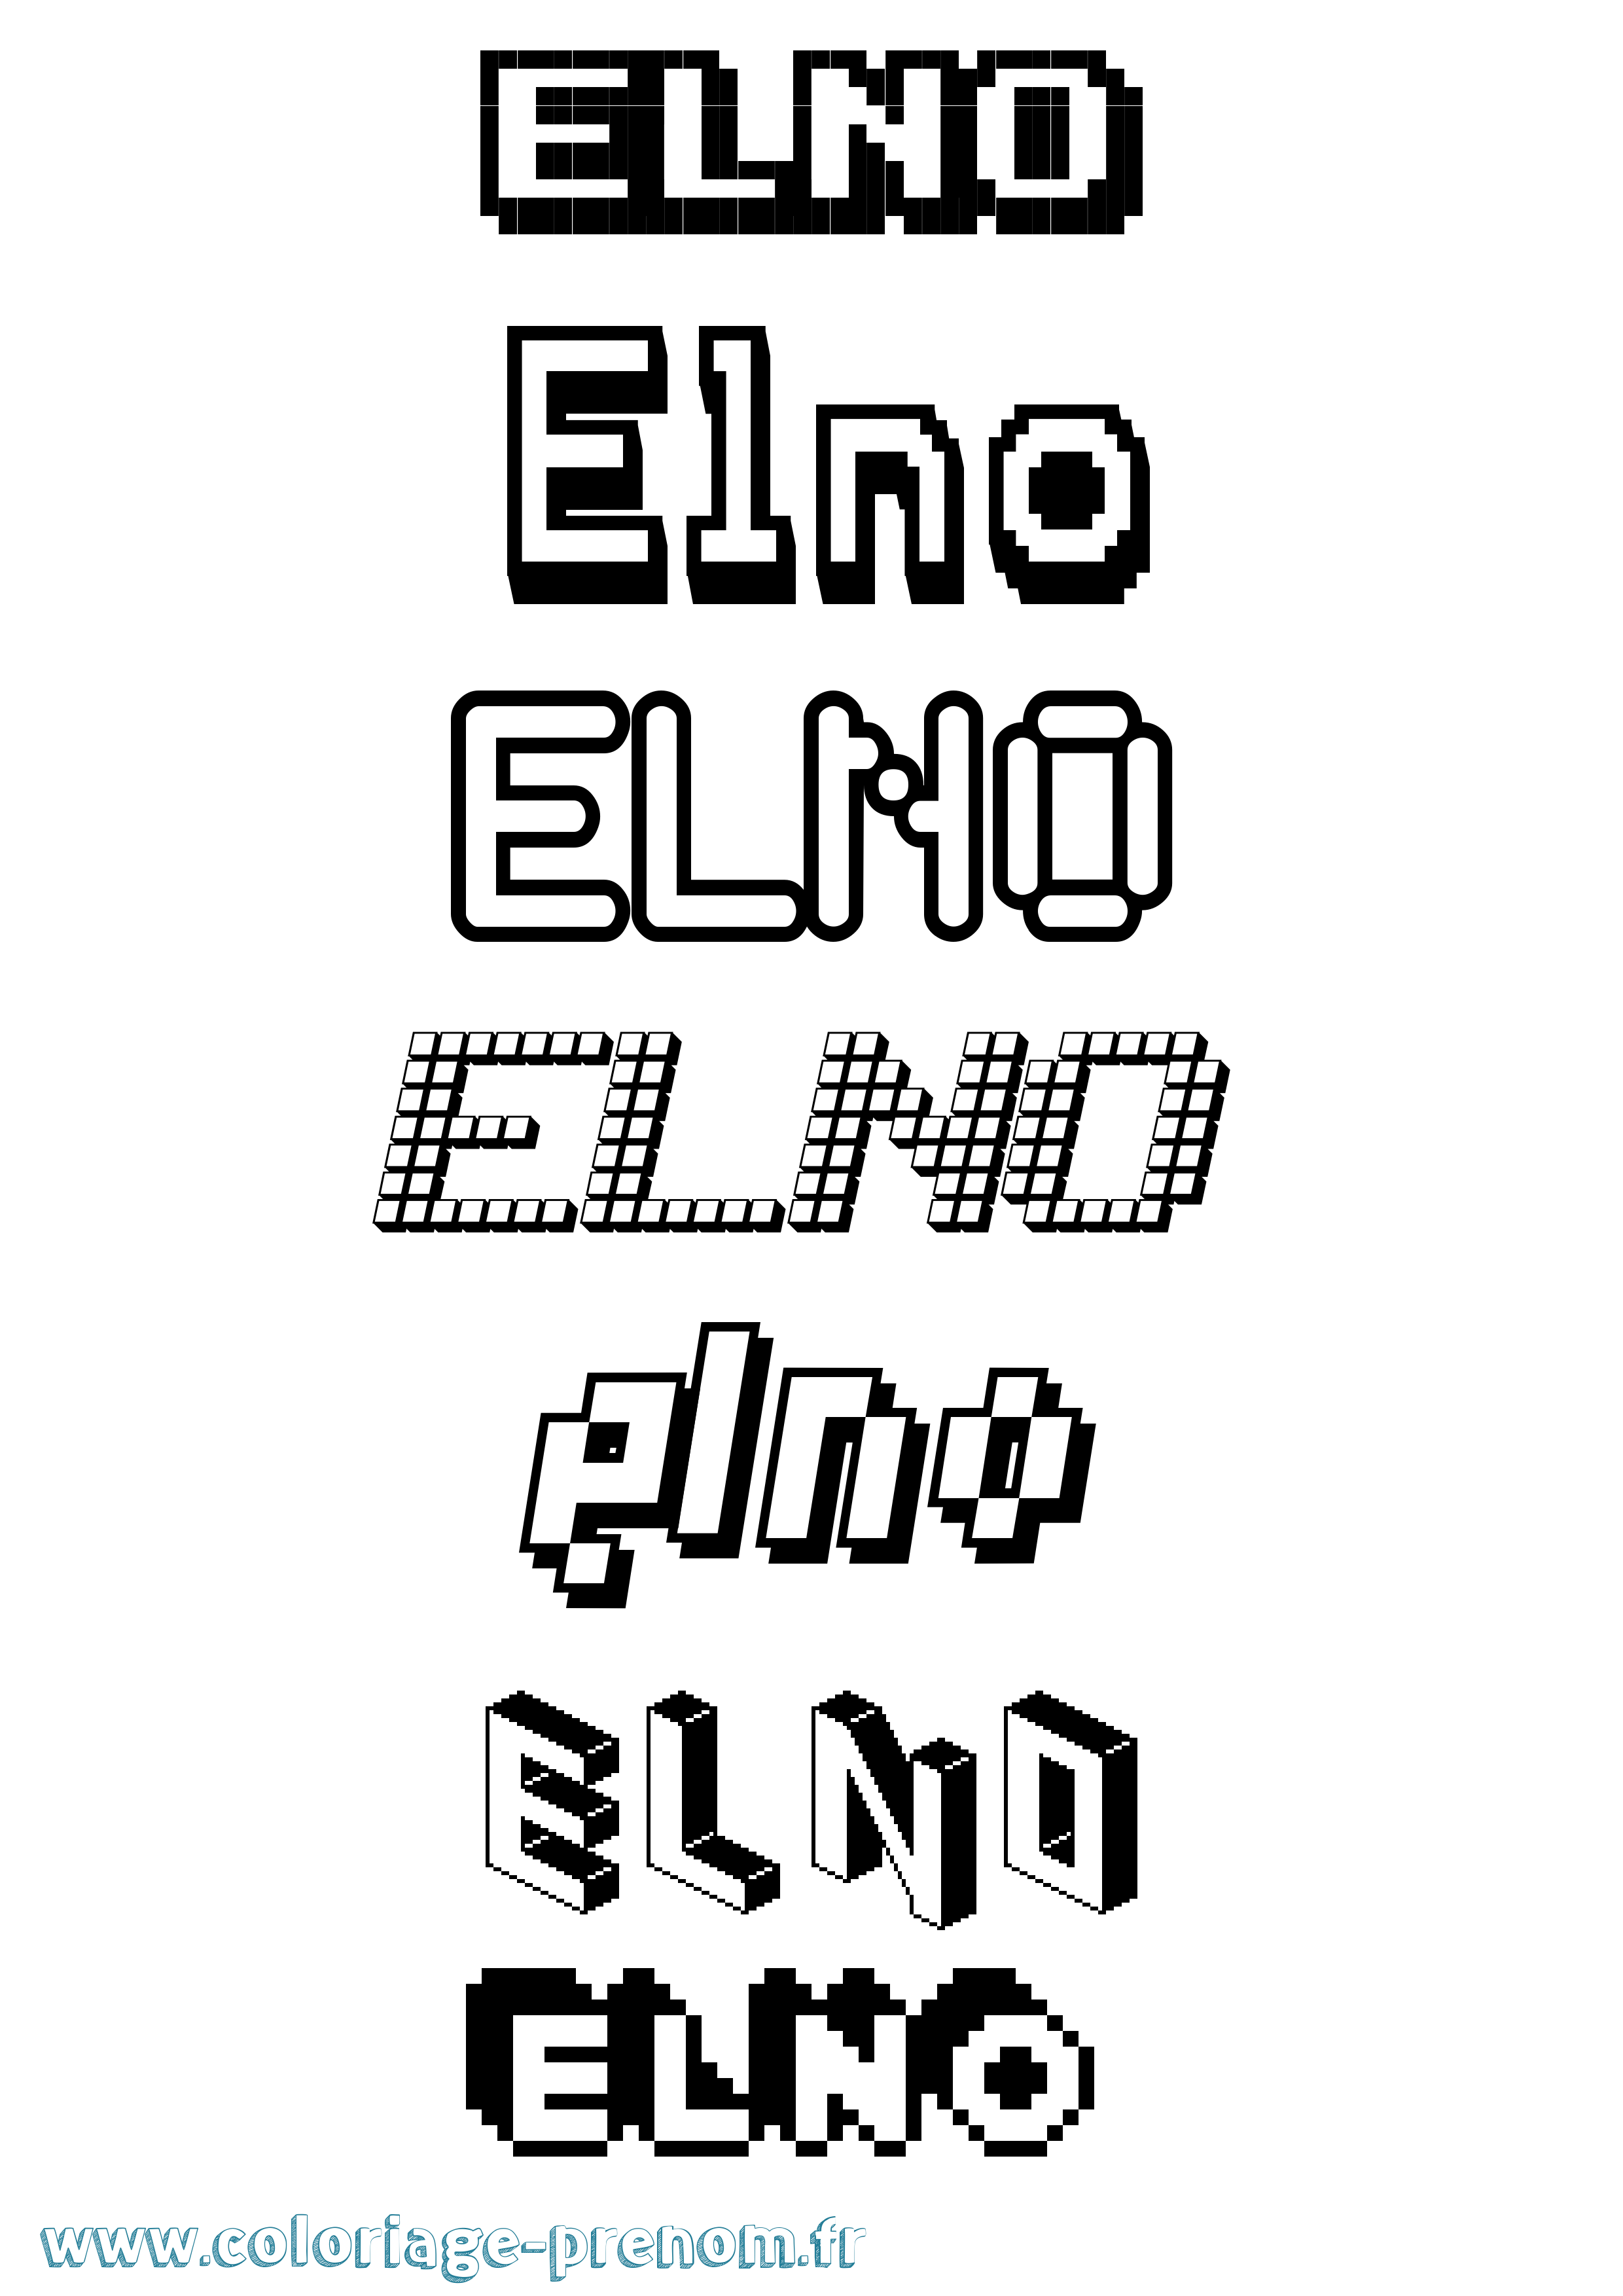 Coloriage prénom Elno Pixel